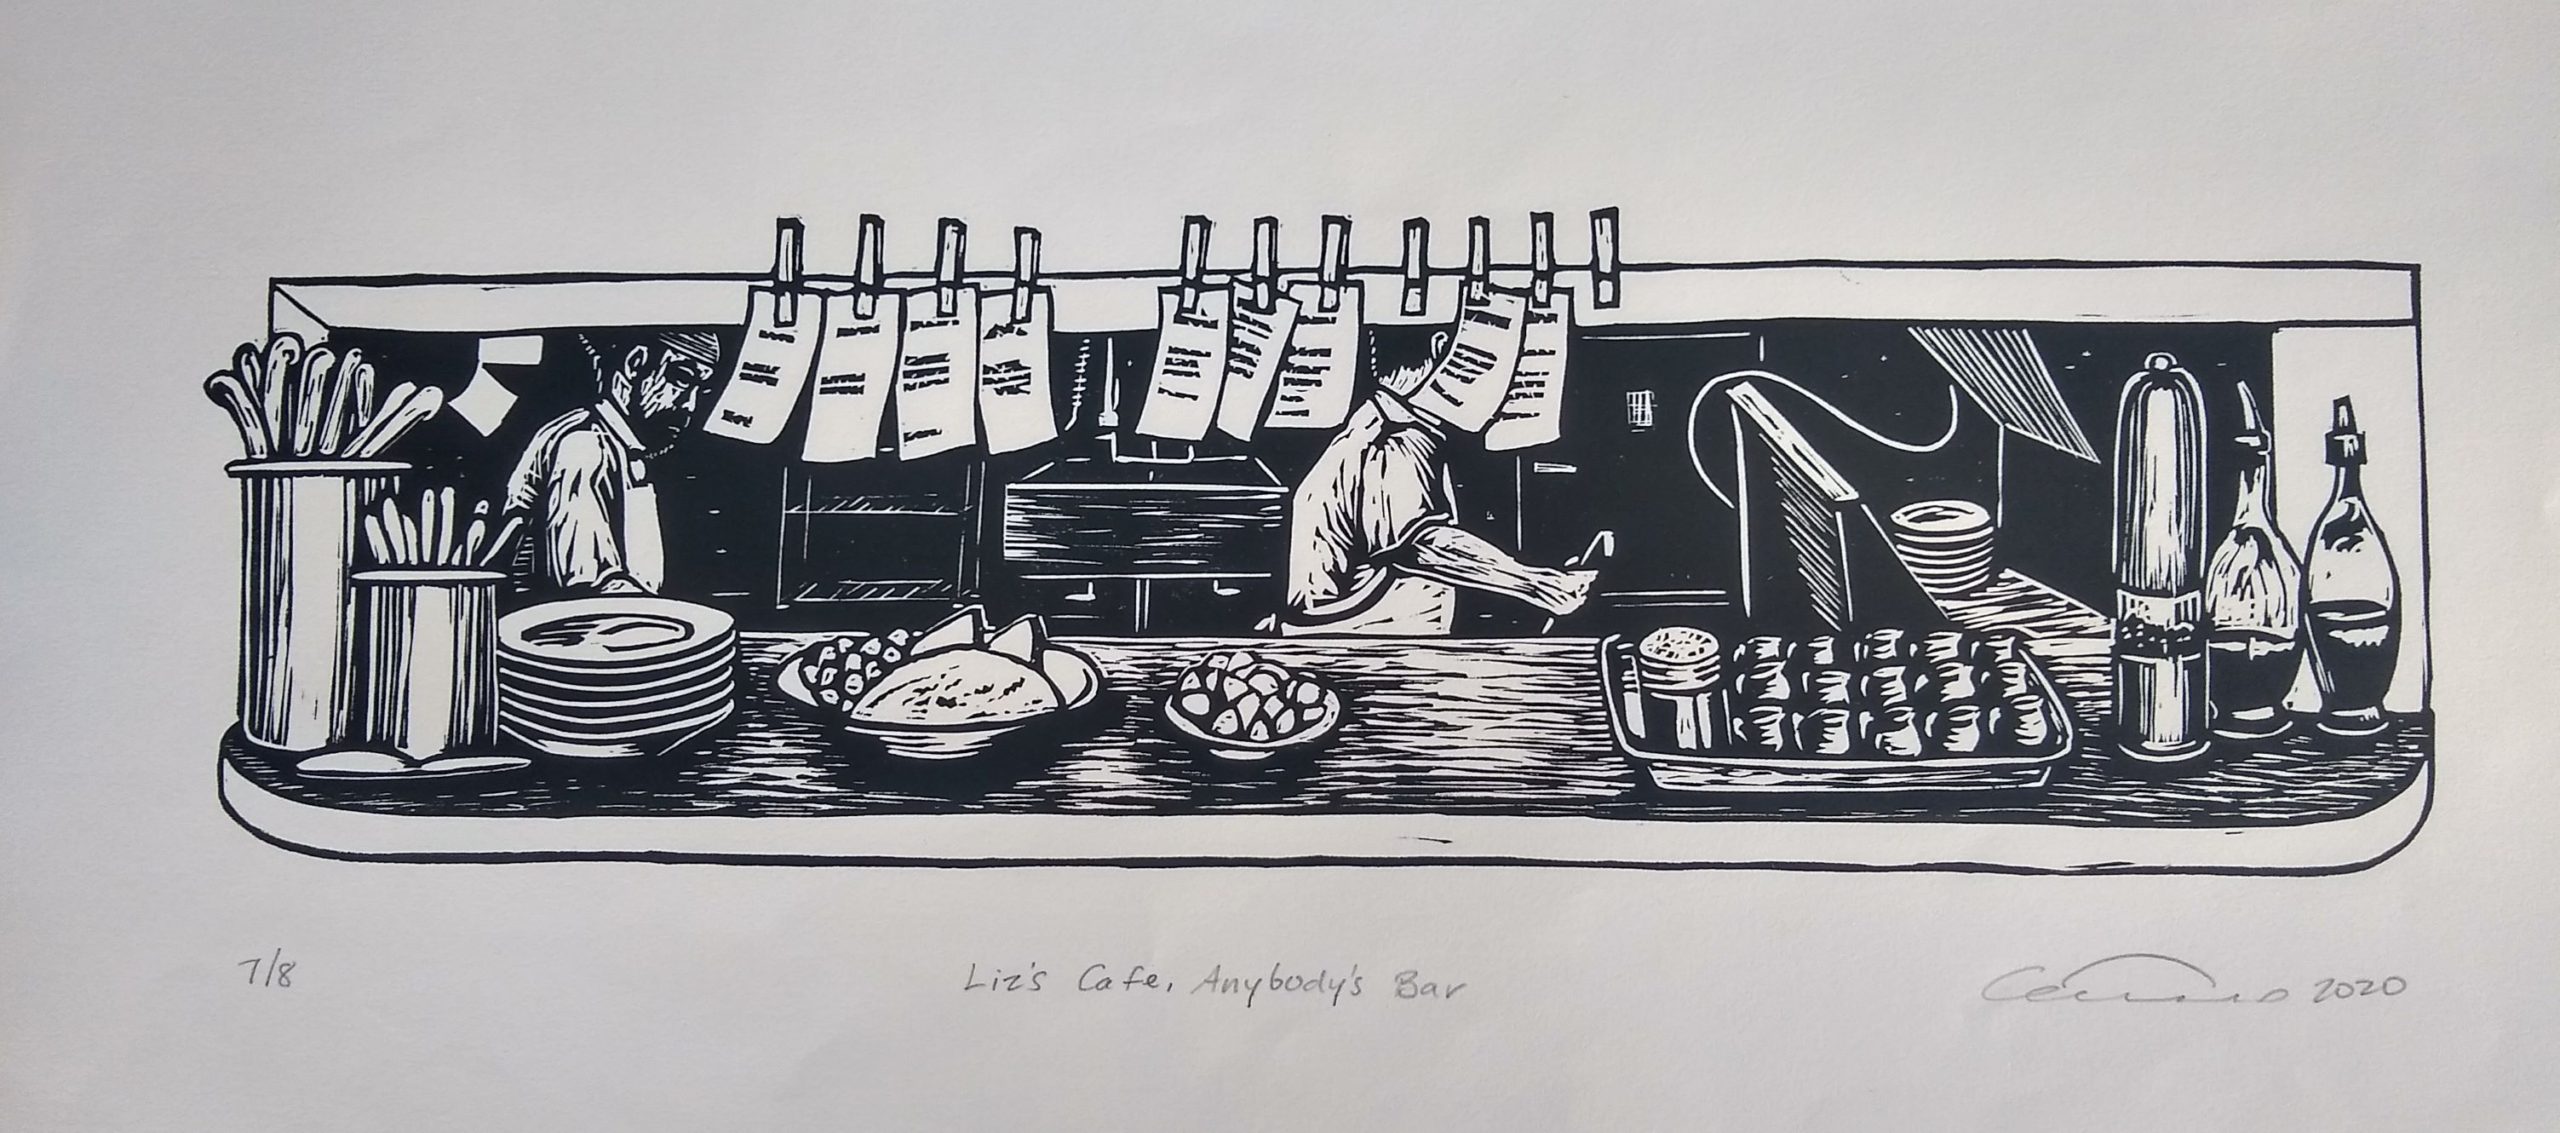 Liz's Cafe, Anybody's Bar (linocut print) by Catherine Aiello